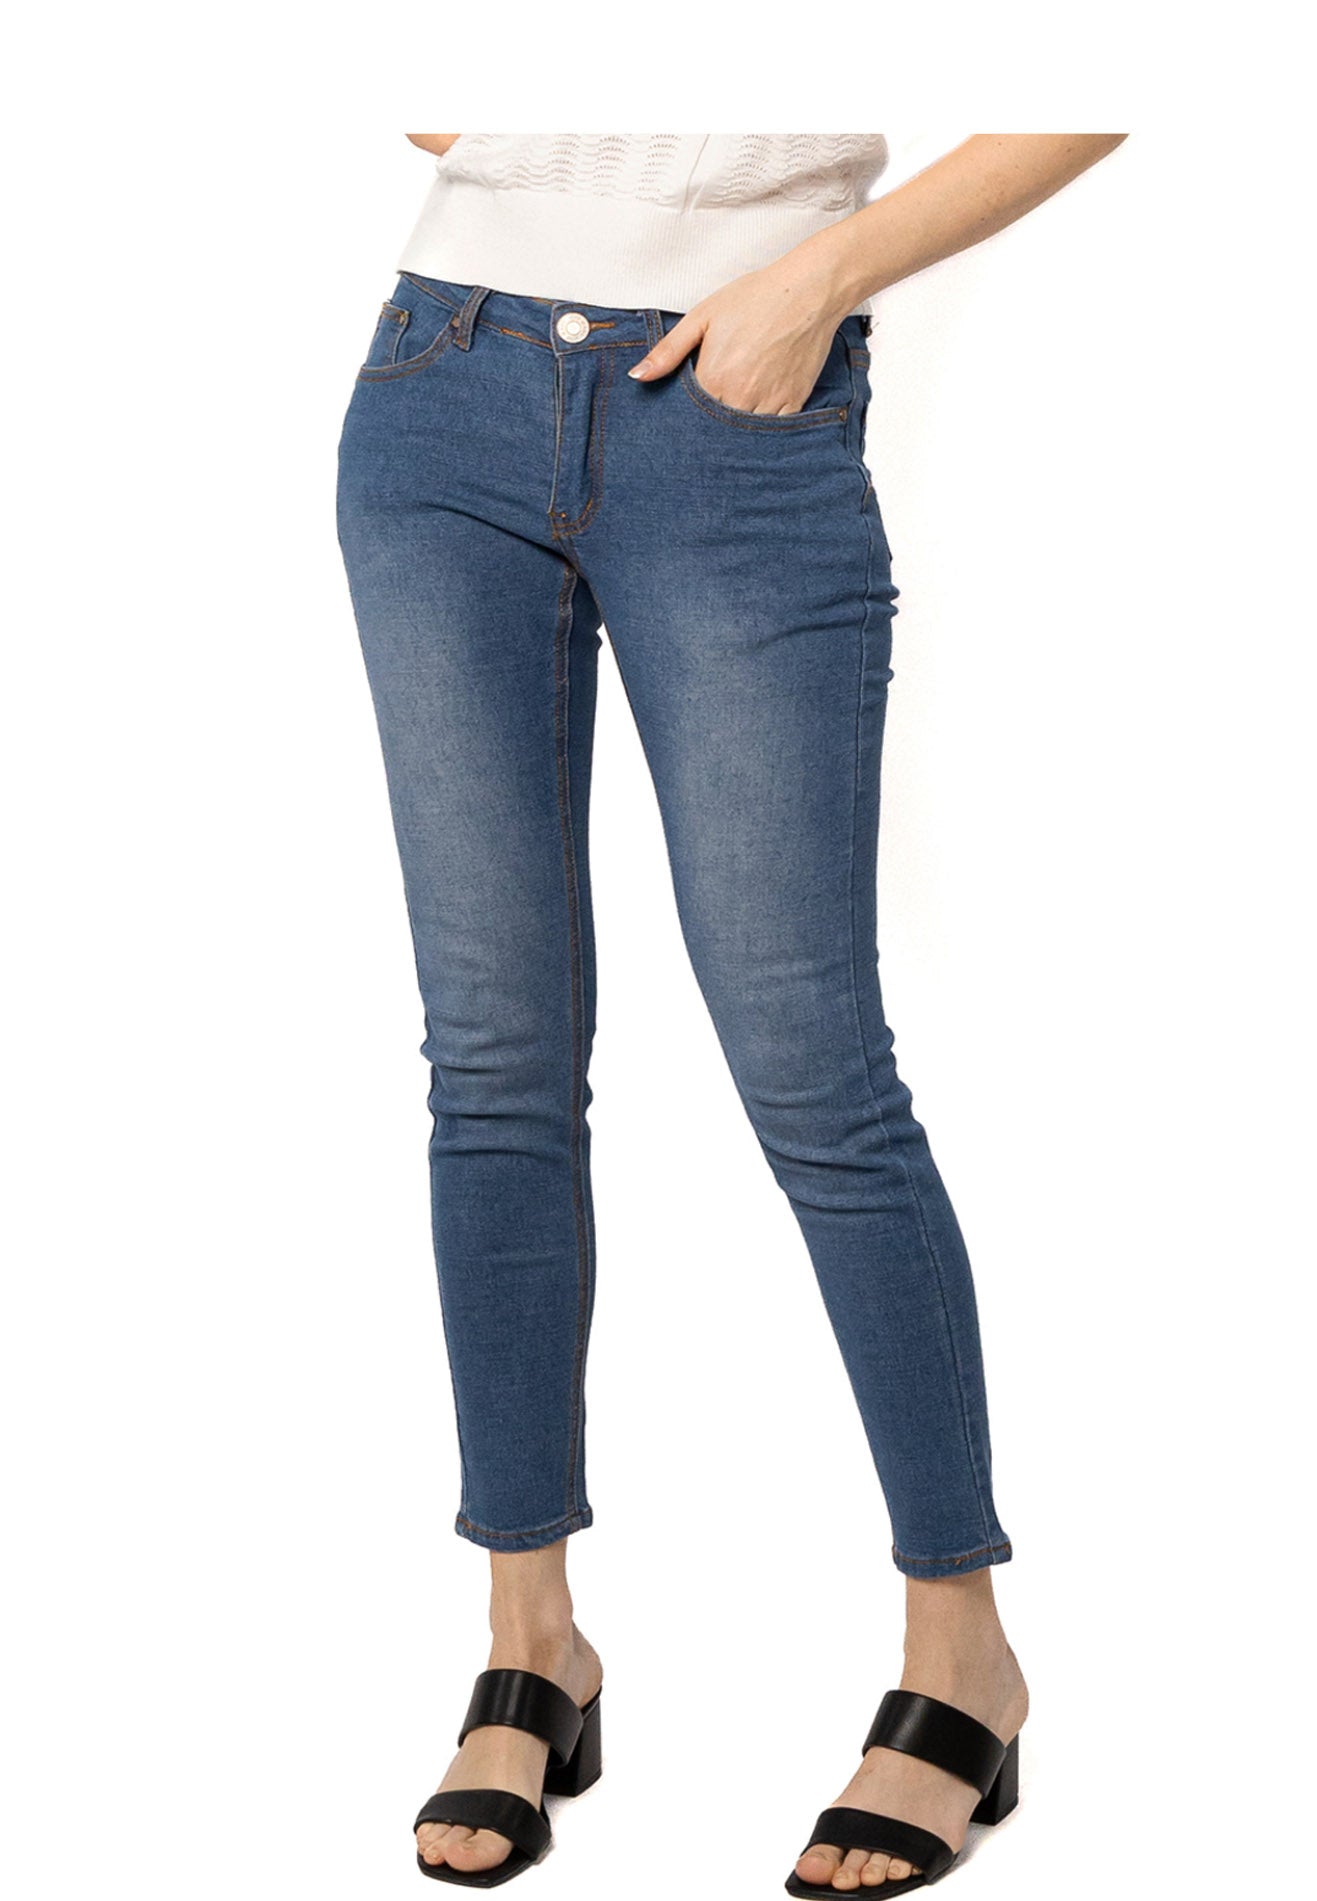 VOIR JEANS #305 Medium Rise Waist Relax Slim Cut Jeans